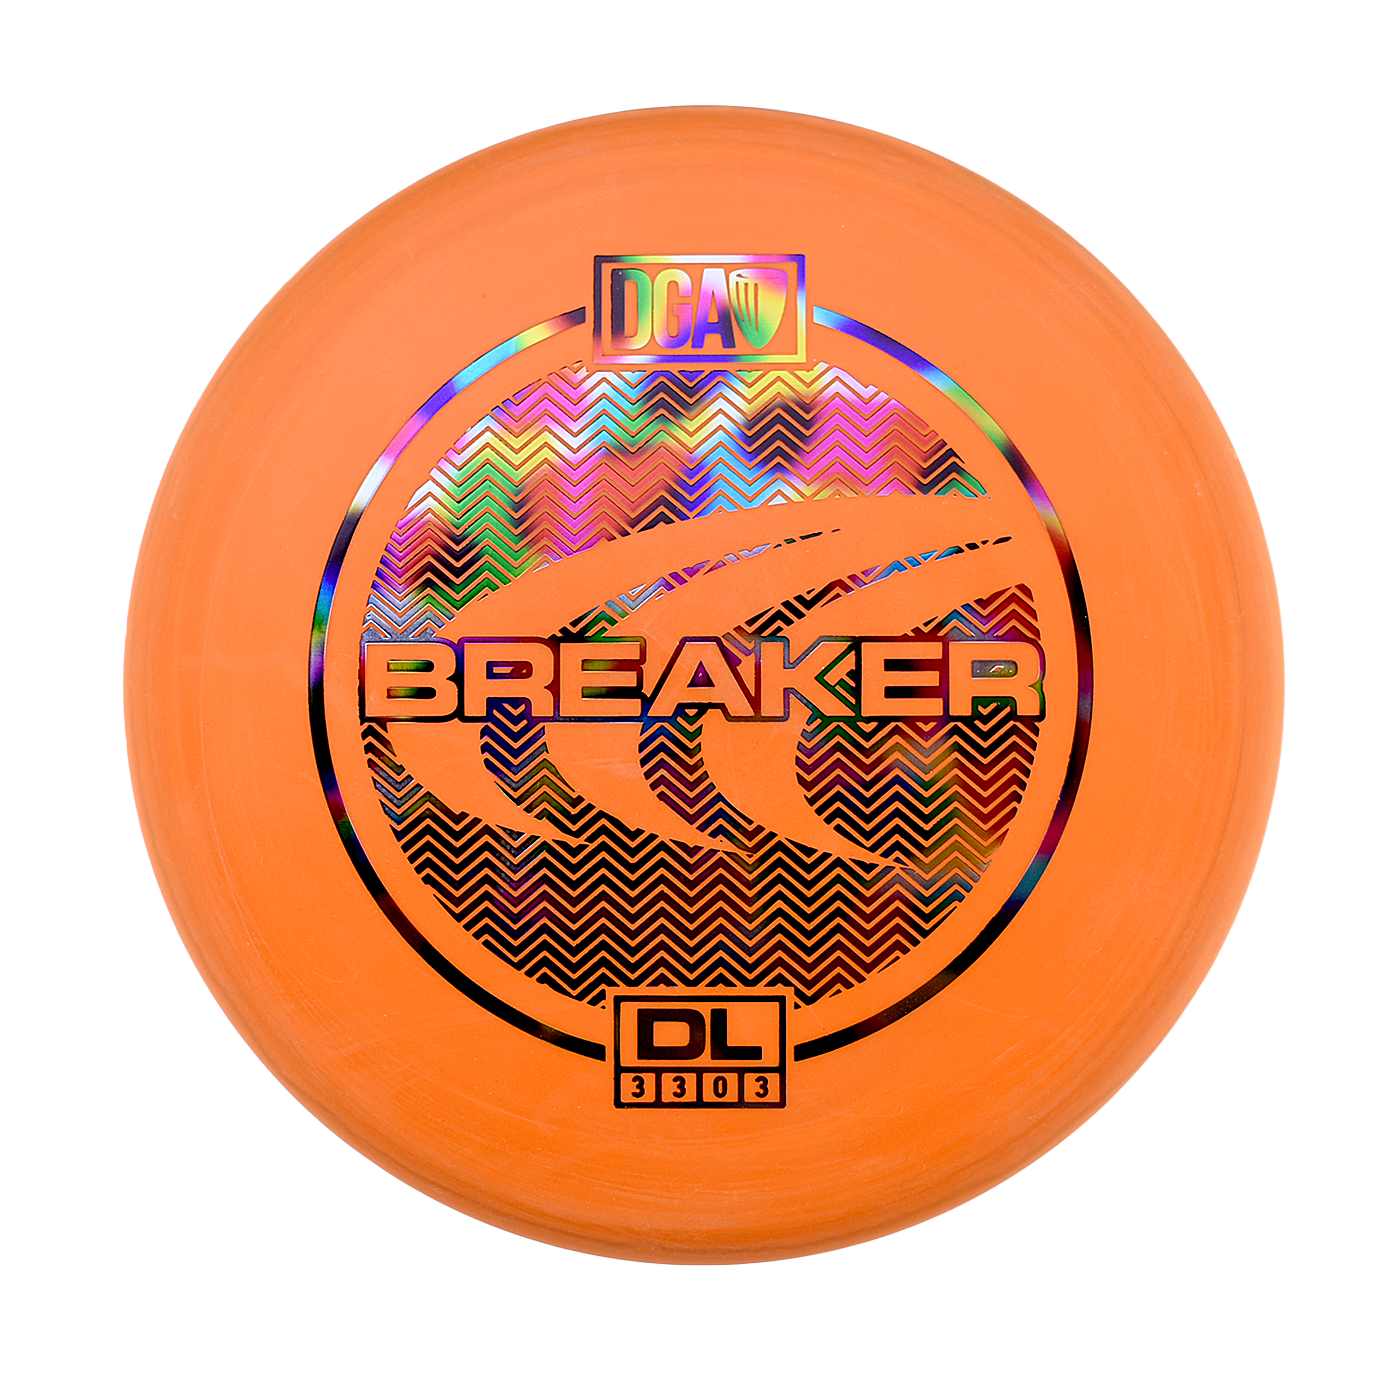 DGA Breaker - D-Line